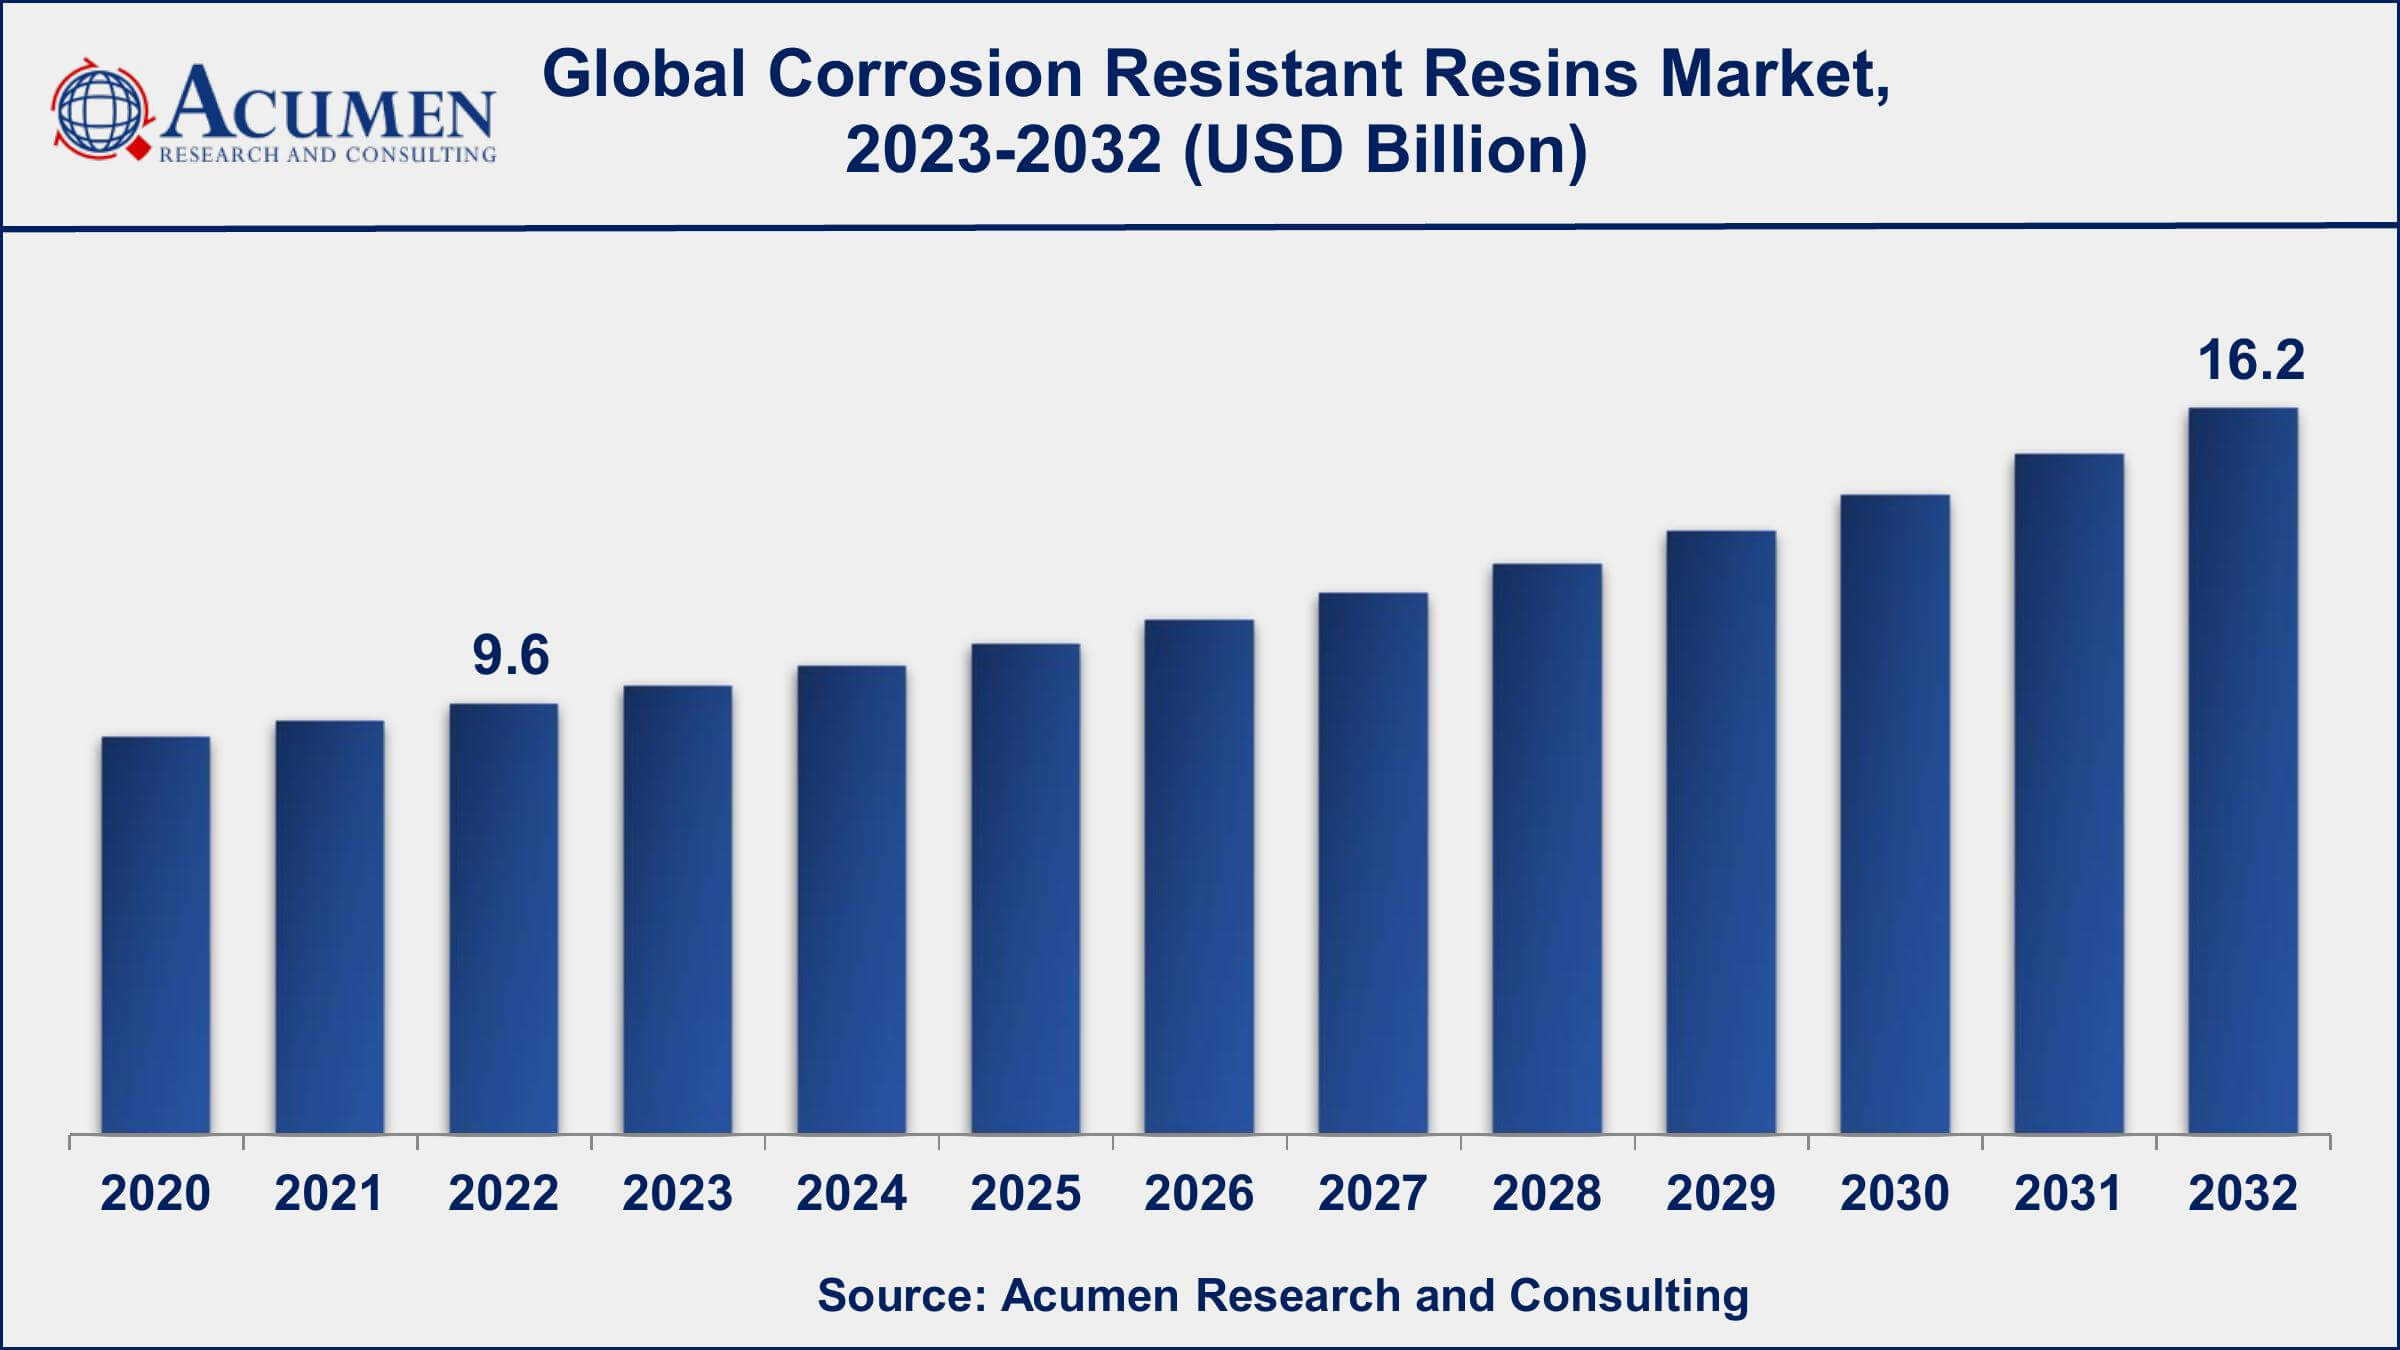 Corrosion Resistant Resins Market Analysis Period